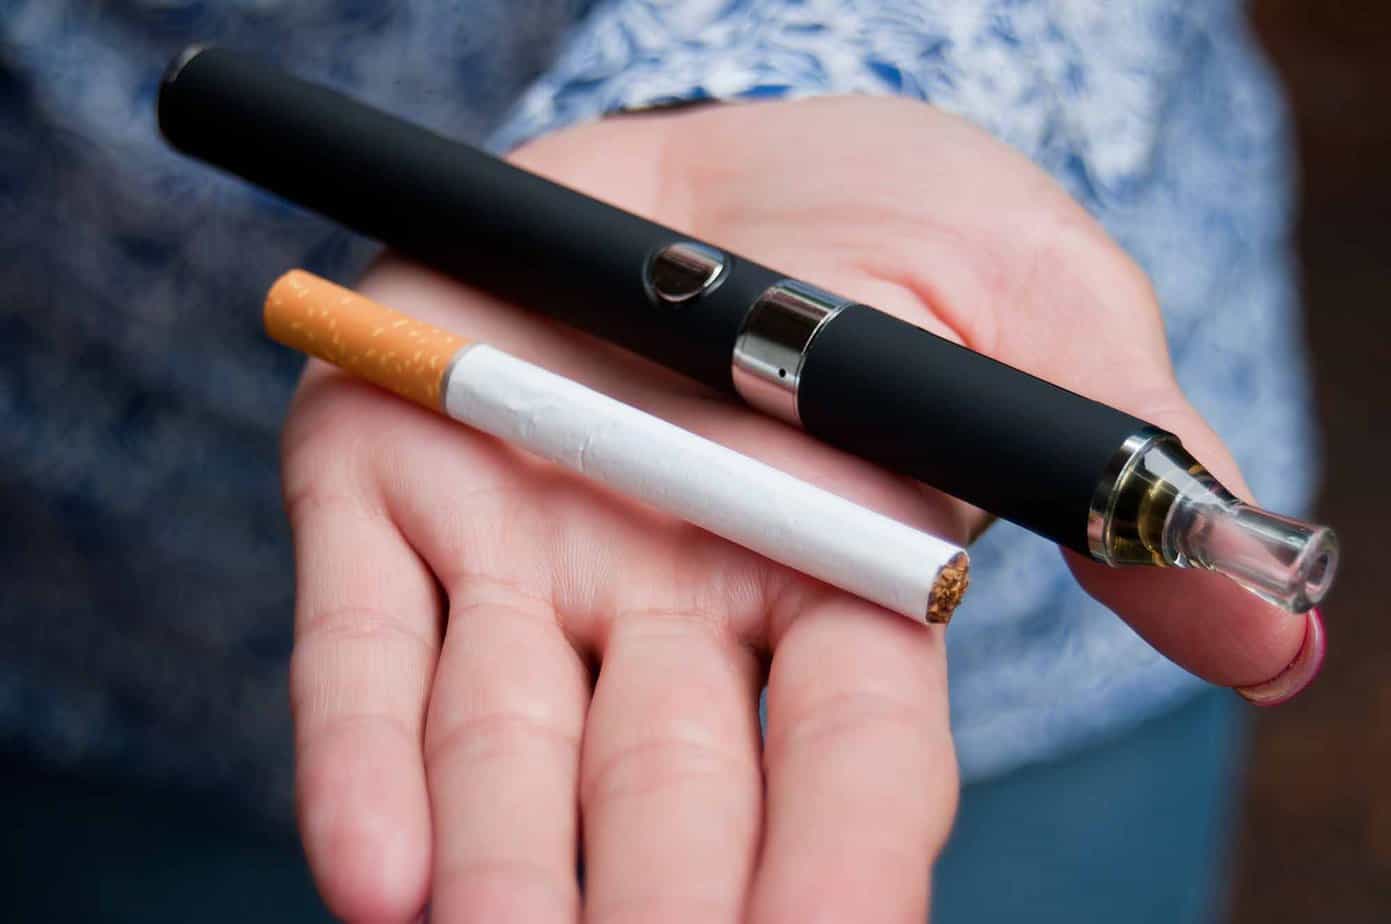 lit cigarette and juul vape pen held in hand